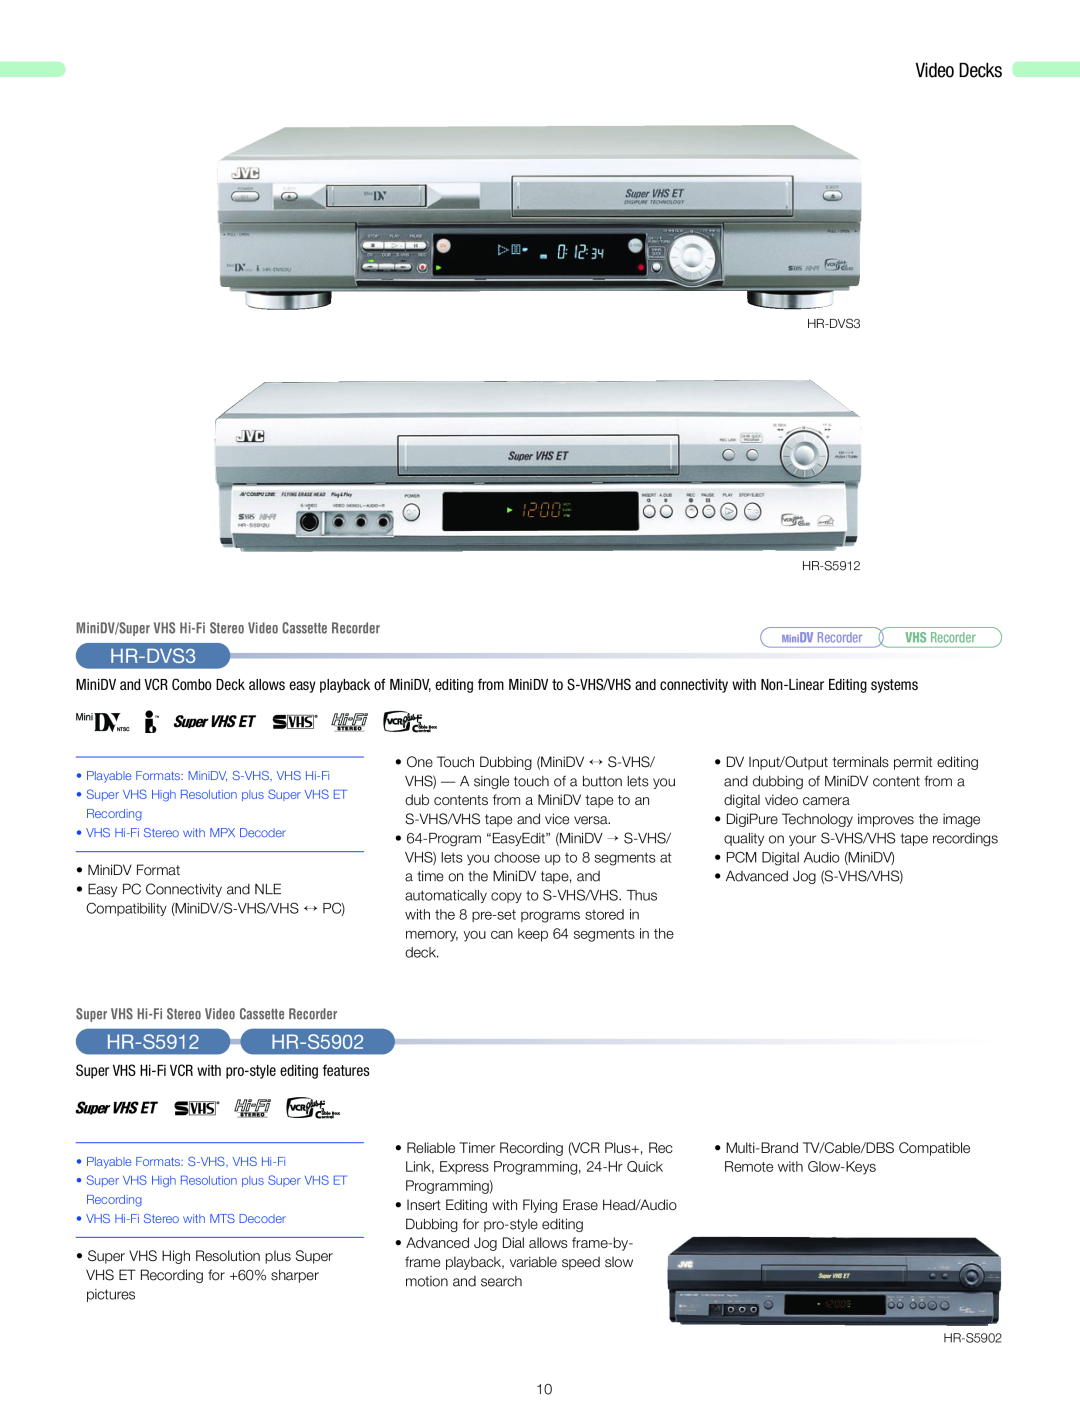 JVC 2006 HR-DVS3, HR-S5912 HR-S5902, MiniDV/Super VHS Hi-Fi Stereo Video Cassette Recorder, Video Decks, MiniDV Recorder 